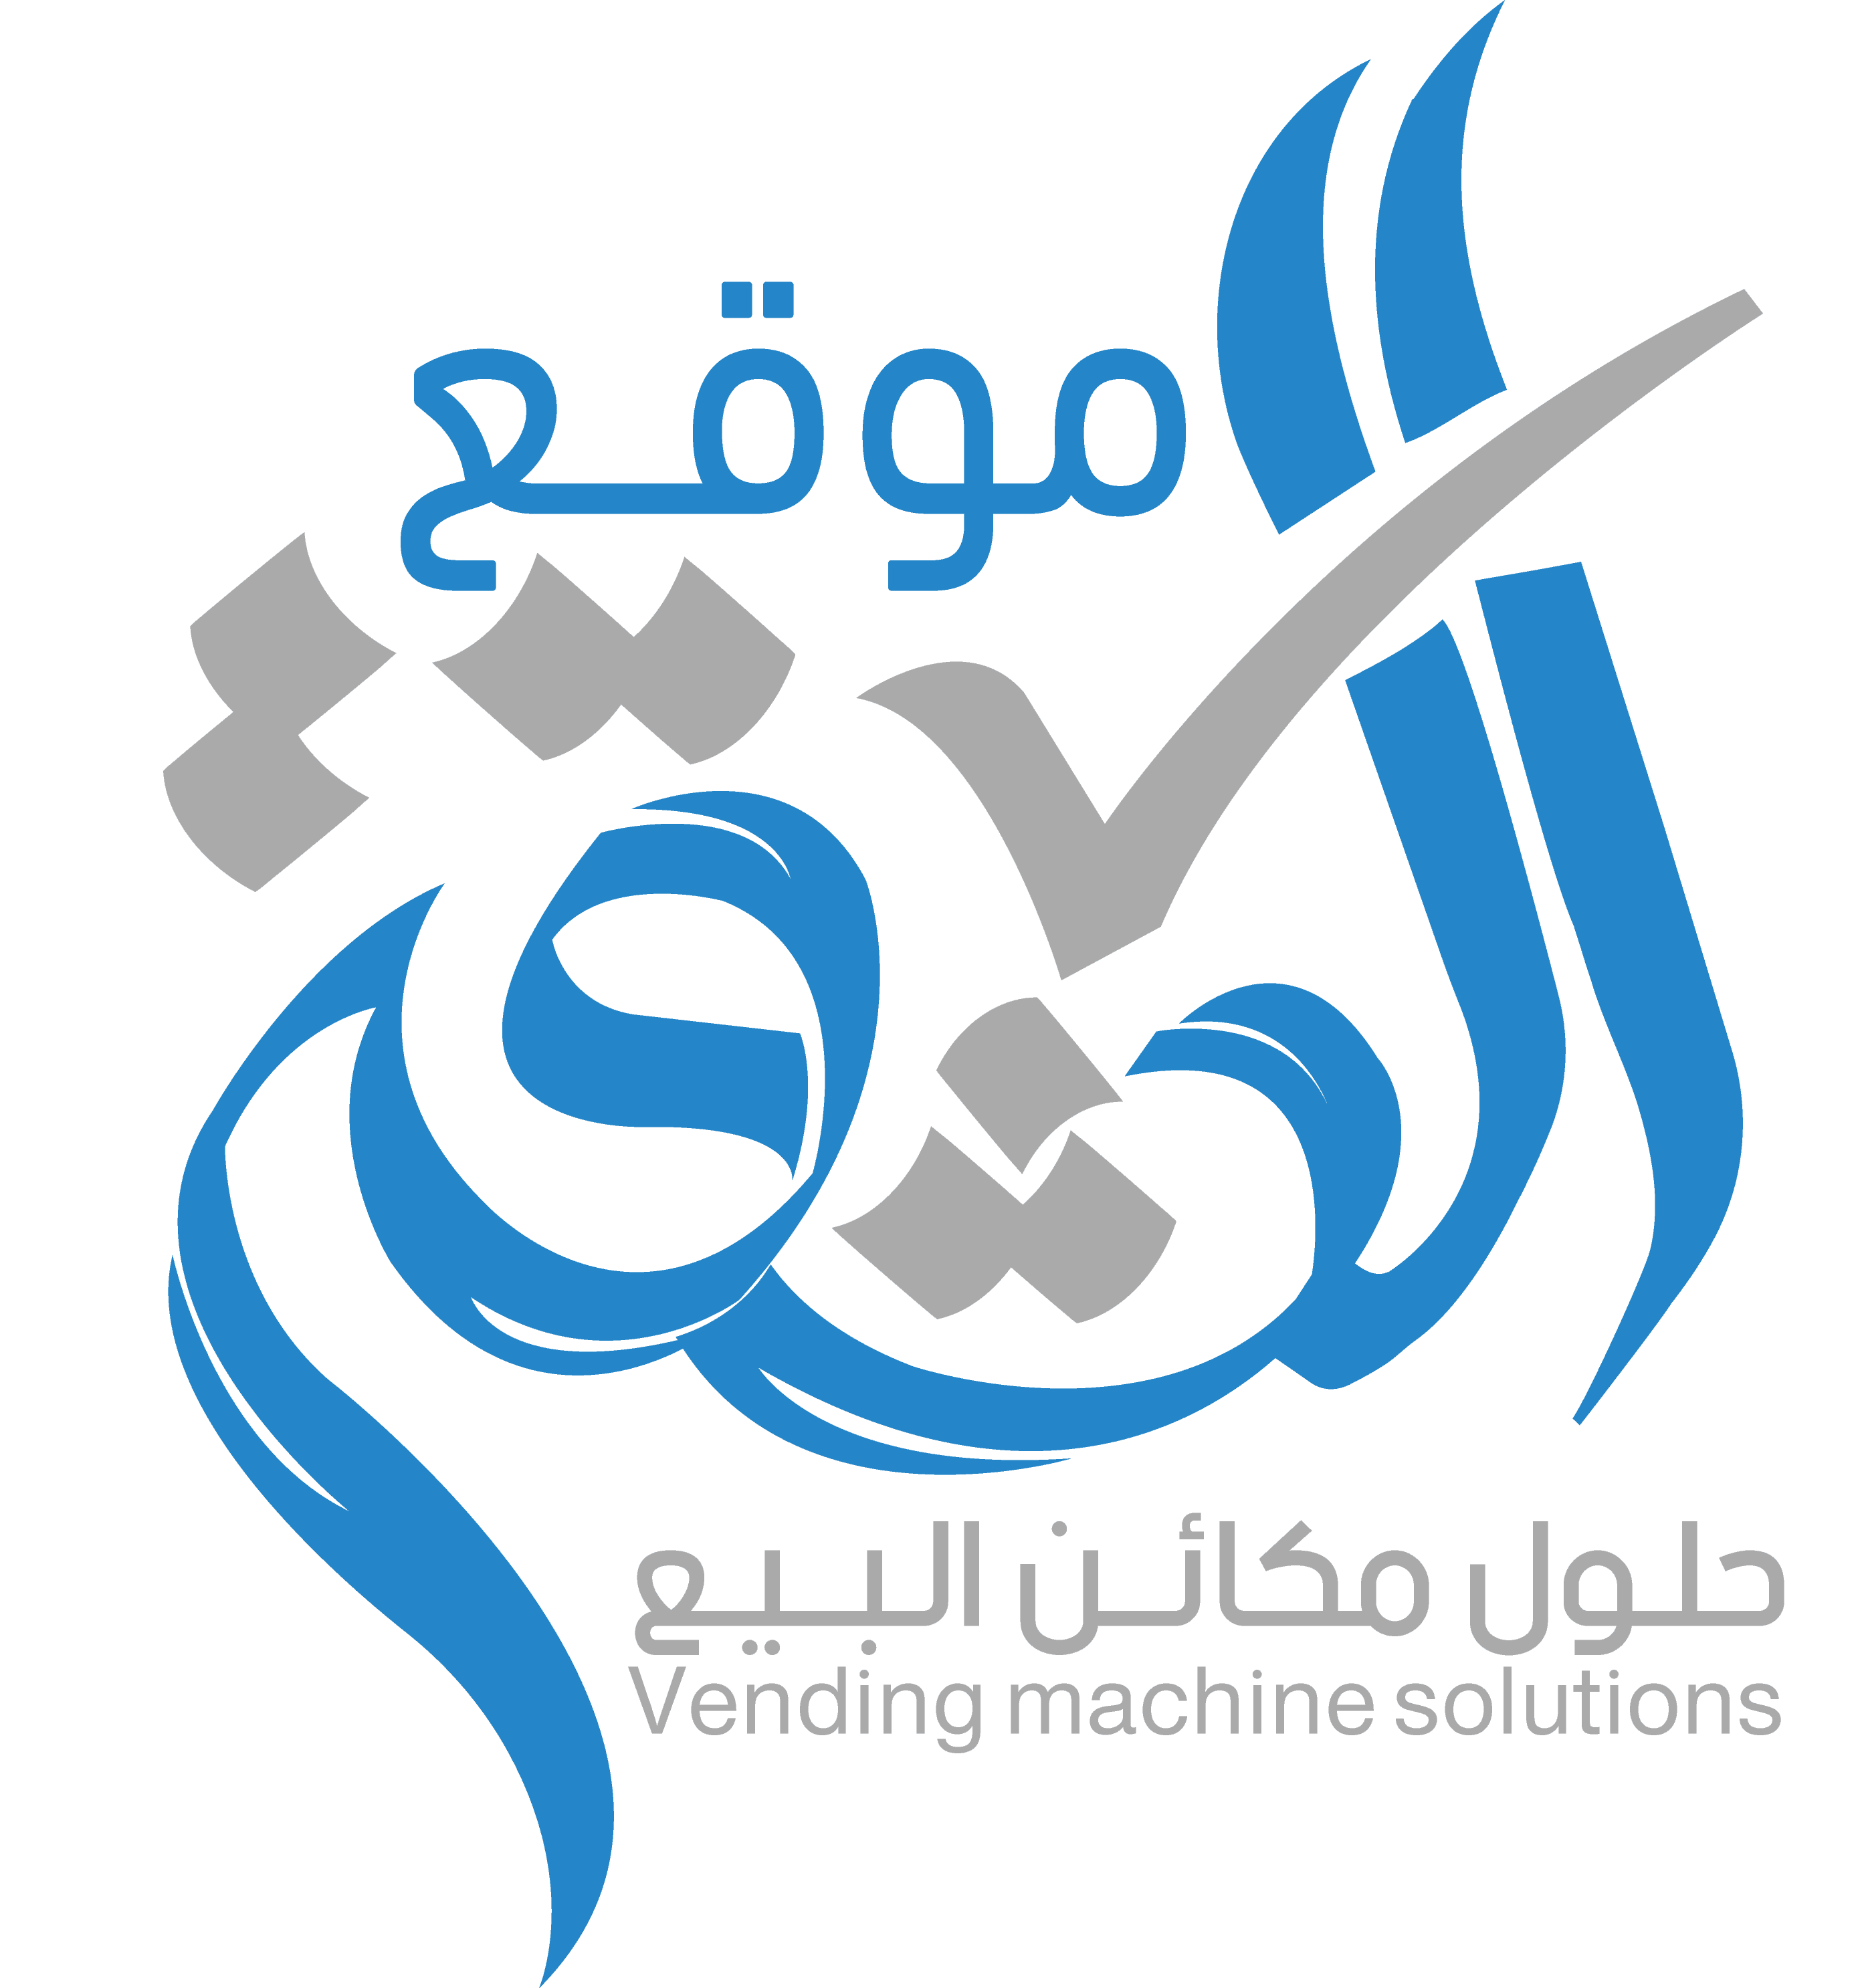 Theqah Vending Machine